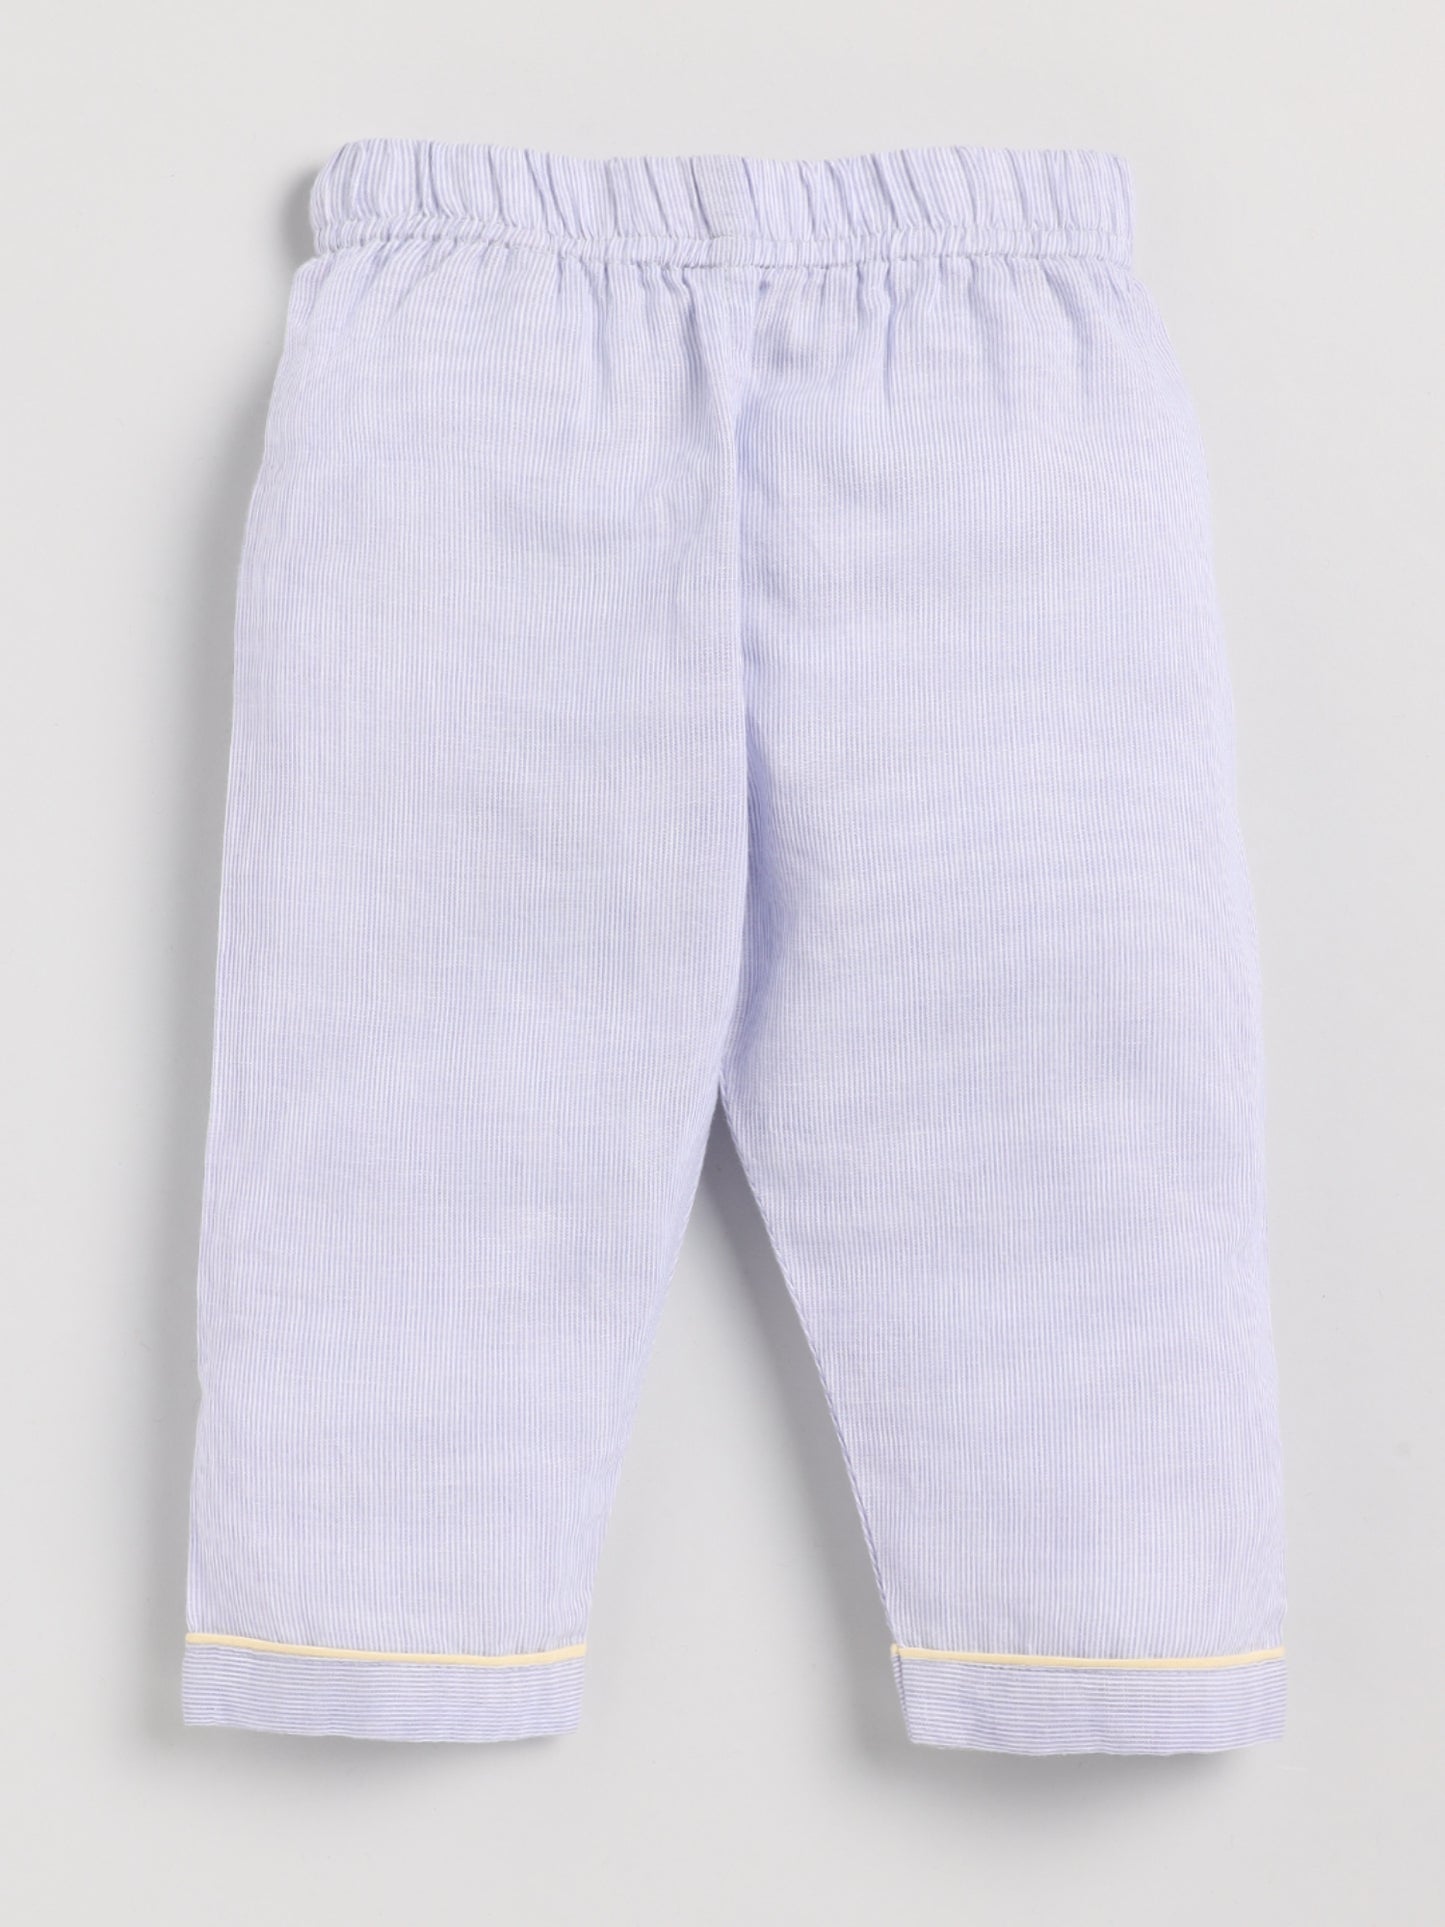 Cuter Version of Dad Striped Blue Full Sleeve Cotton Nightwear Set